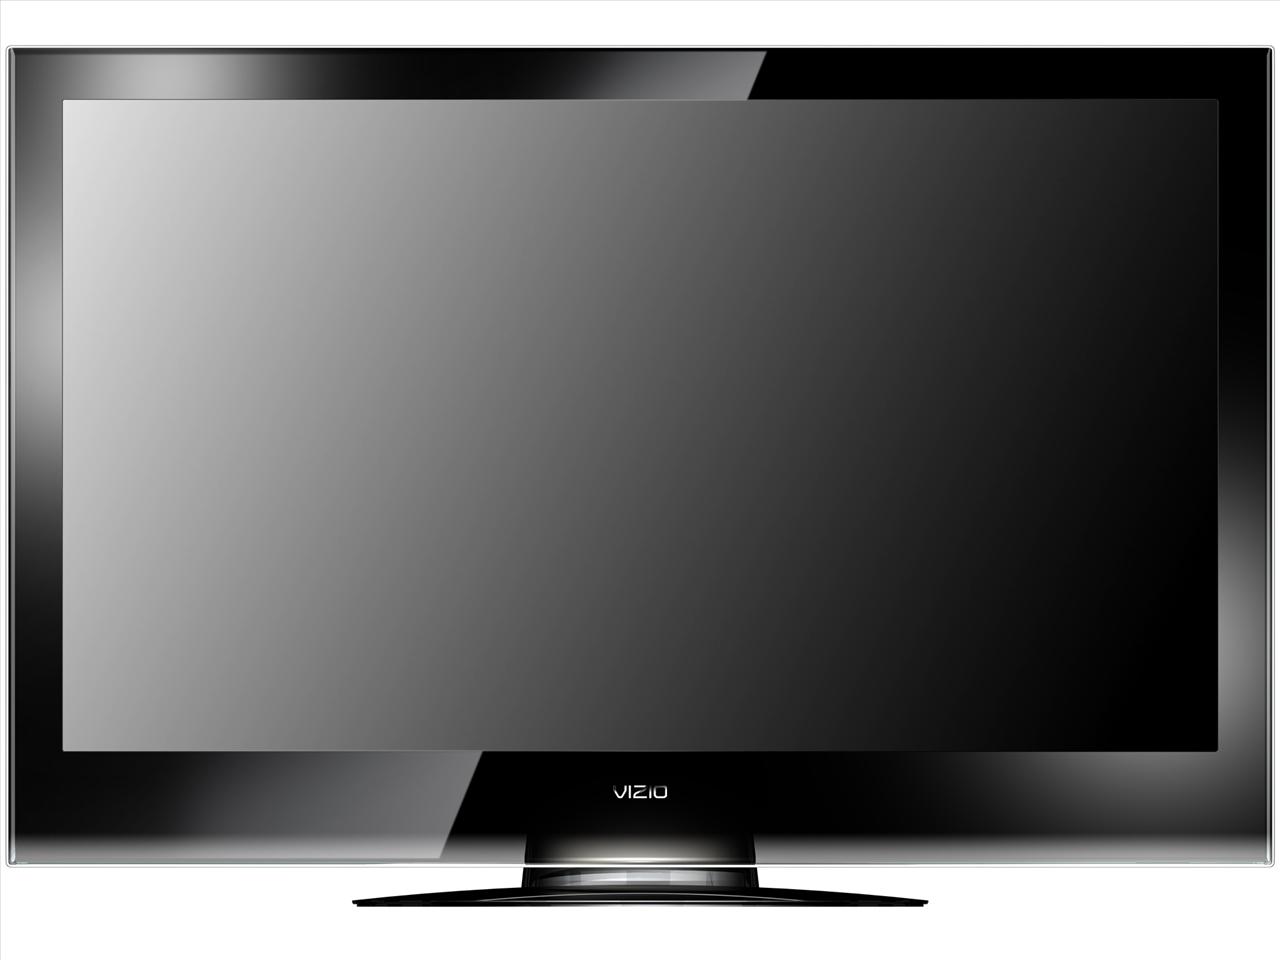 Телевизор sony samsung. ЖК телевизор сони 42 2010 модель. Телевизор LG Plazma 2010 года. Телевизор Панасоник 2010 года. Телевизор LG 72 дюйма.